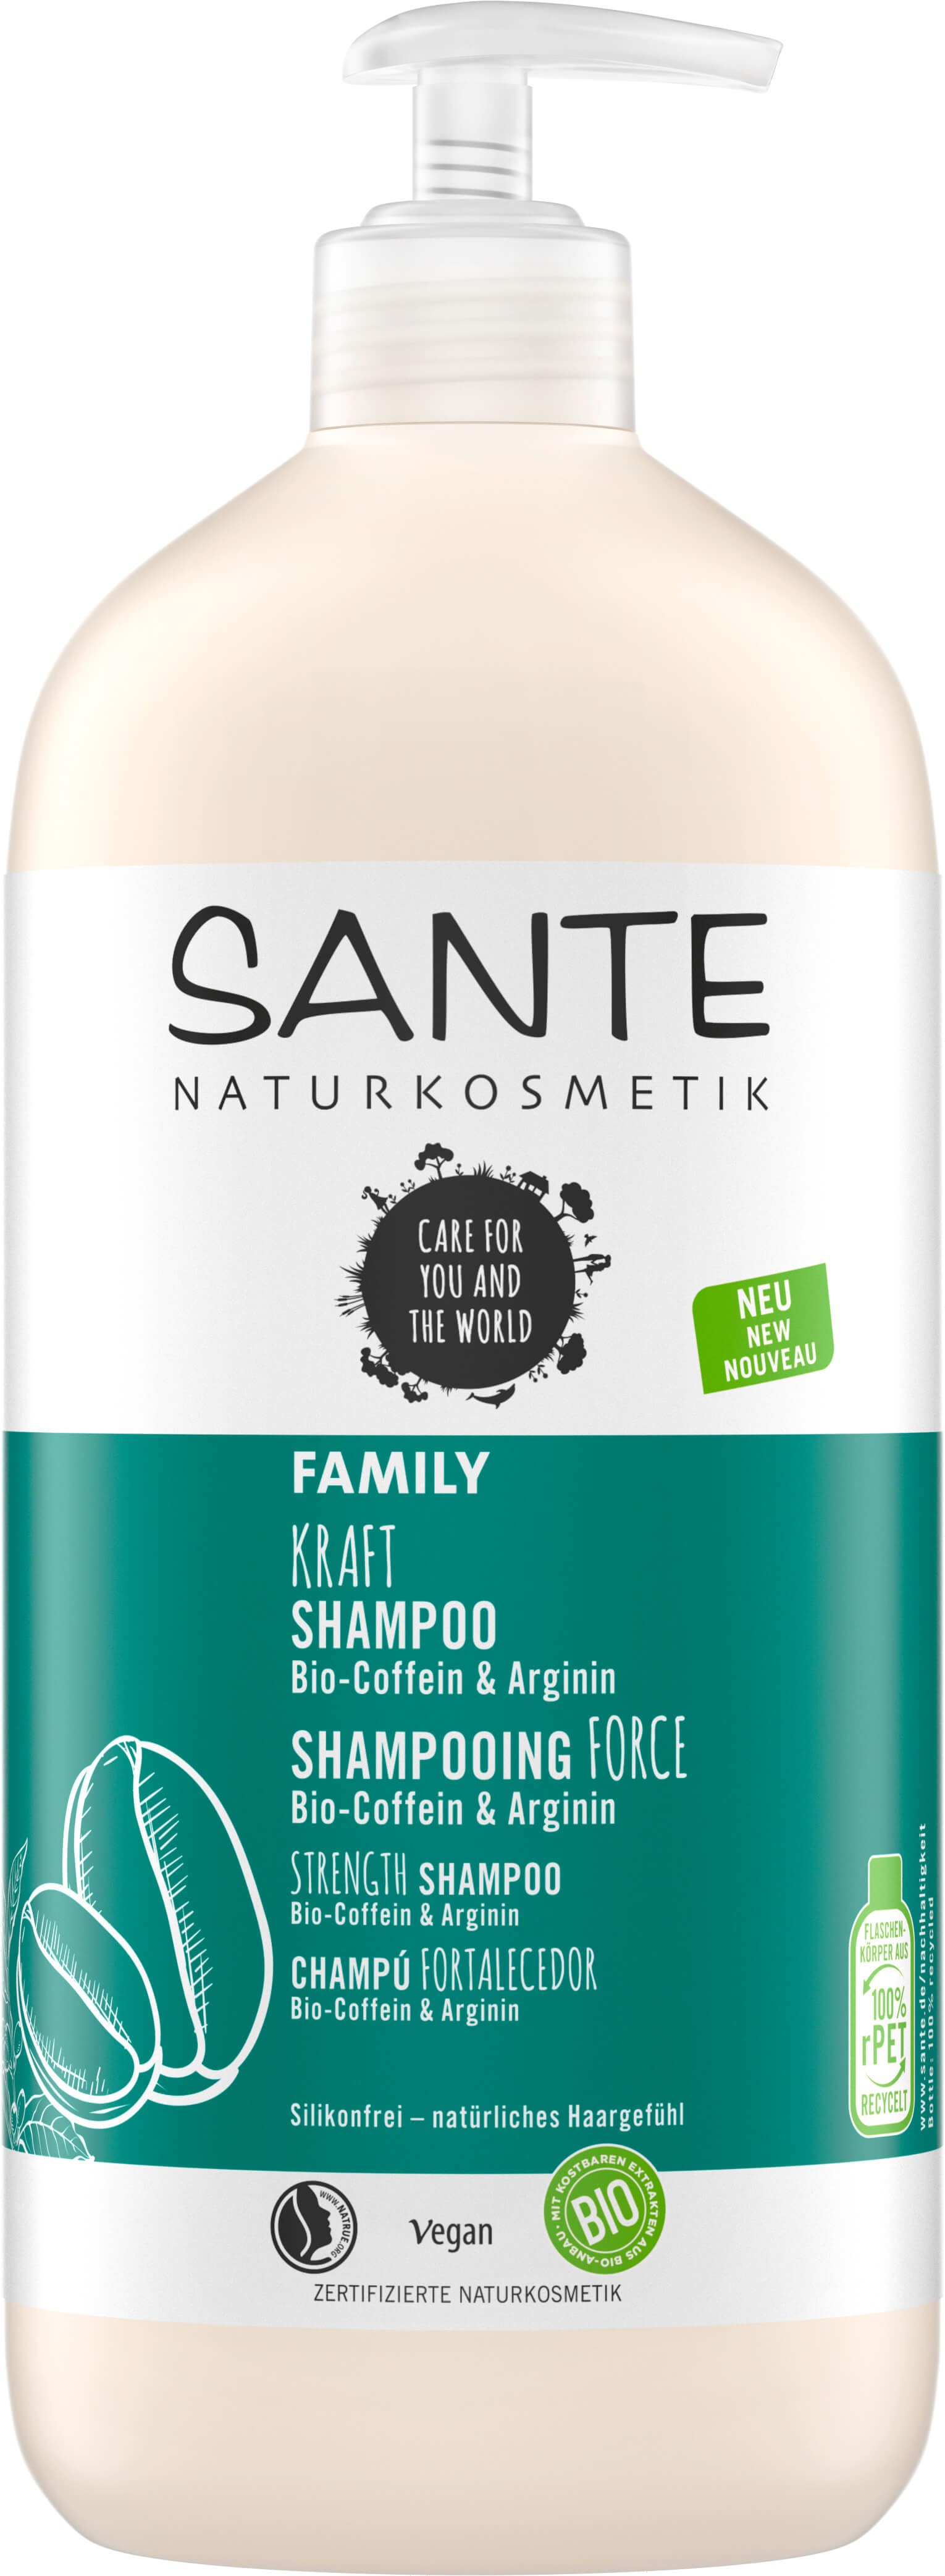 Bio-Coffein Kraft Arginin & Shampoo SANTE Naturkosmetik |